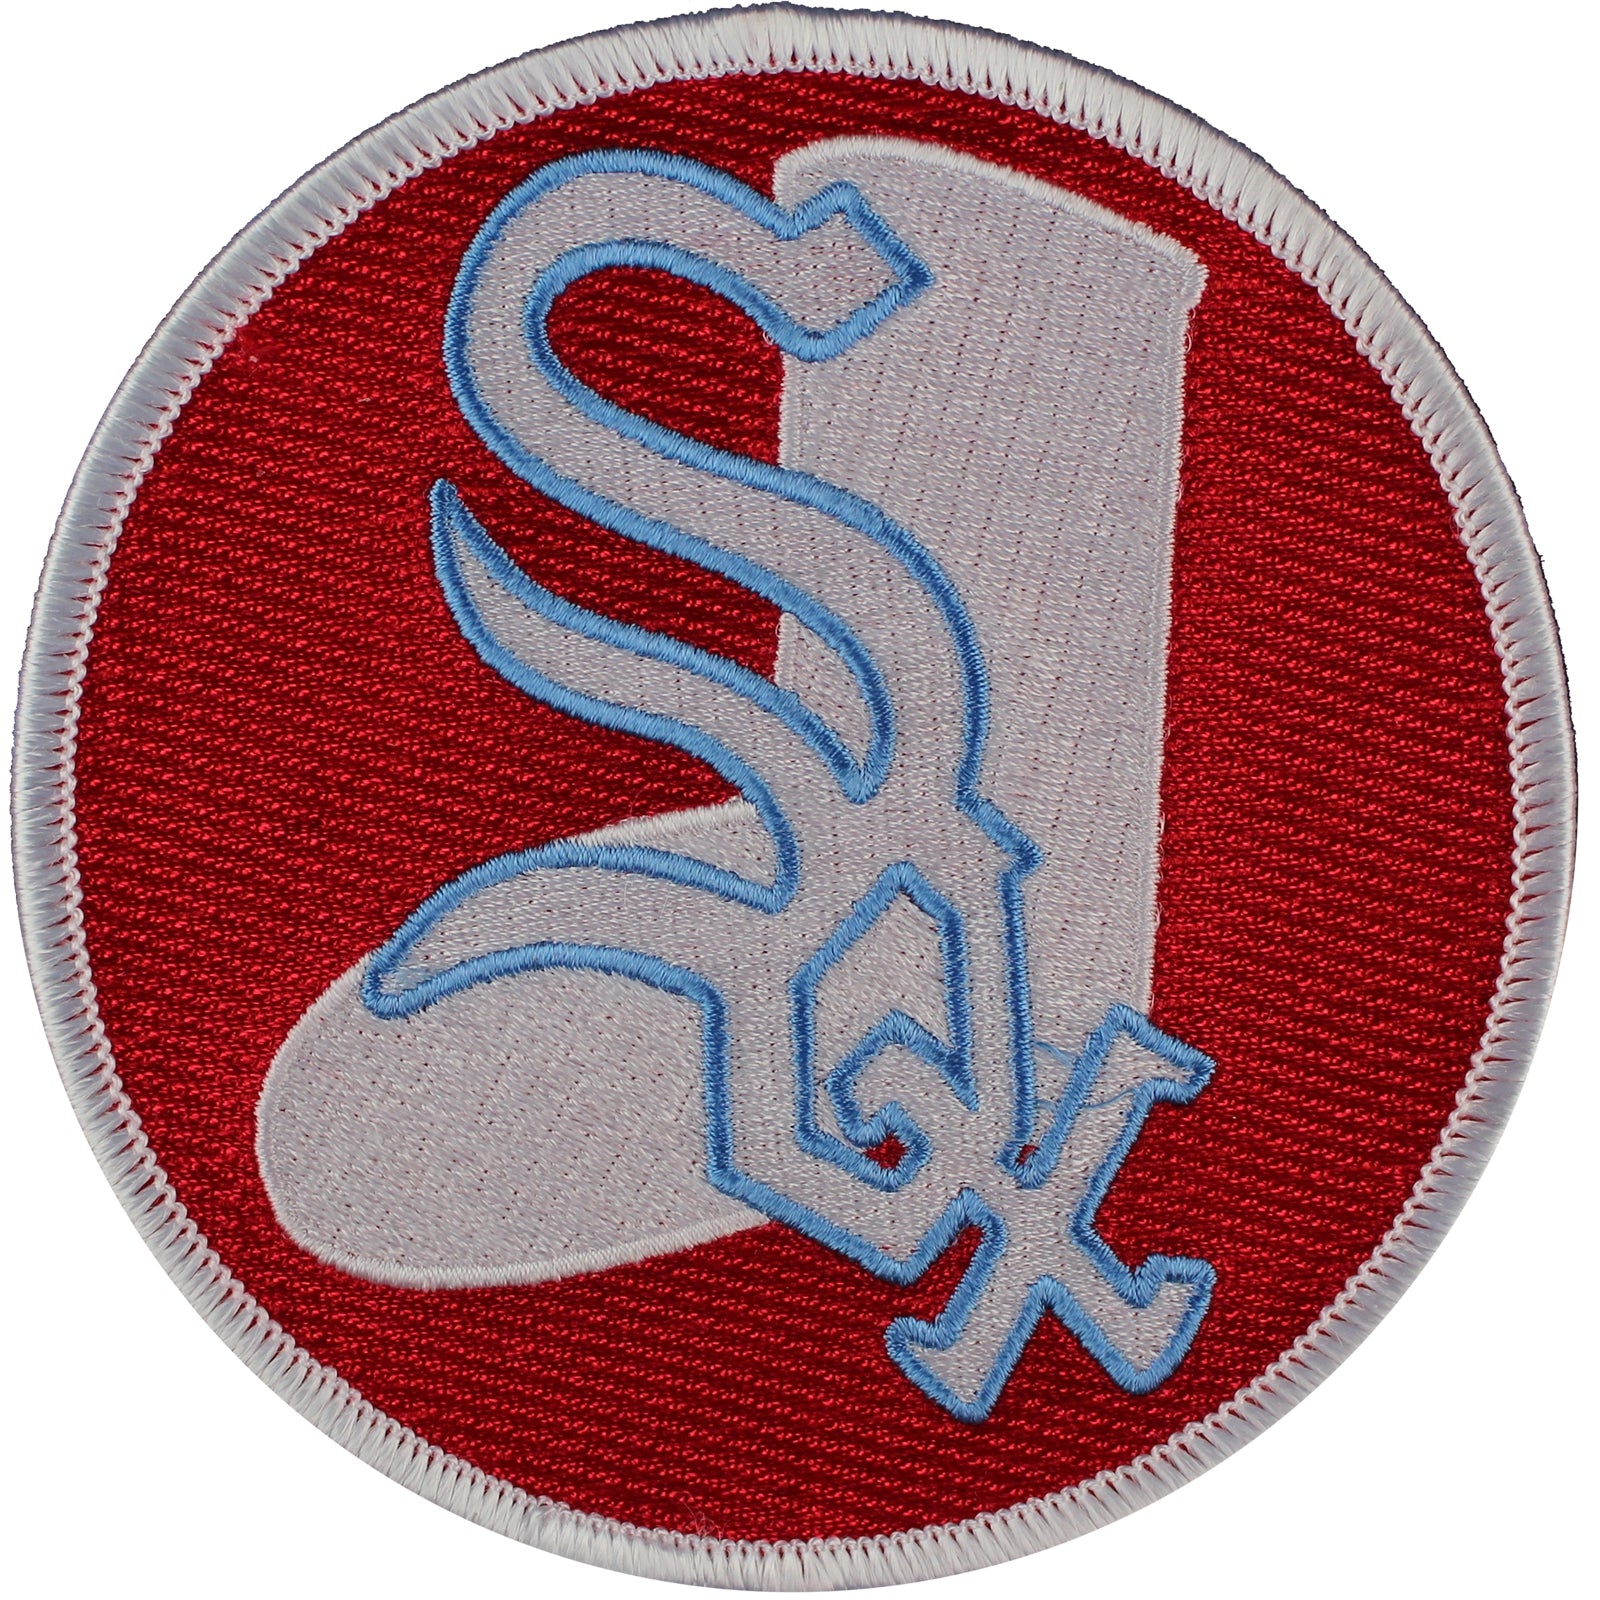 Chicago White Sox Primary Alternate Team Logo Patch (1971-1975) 